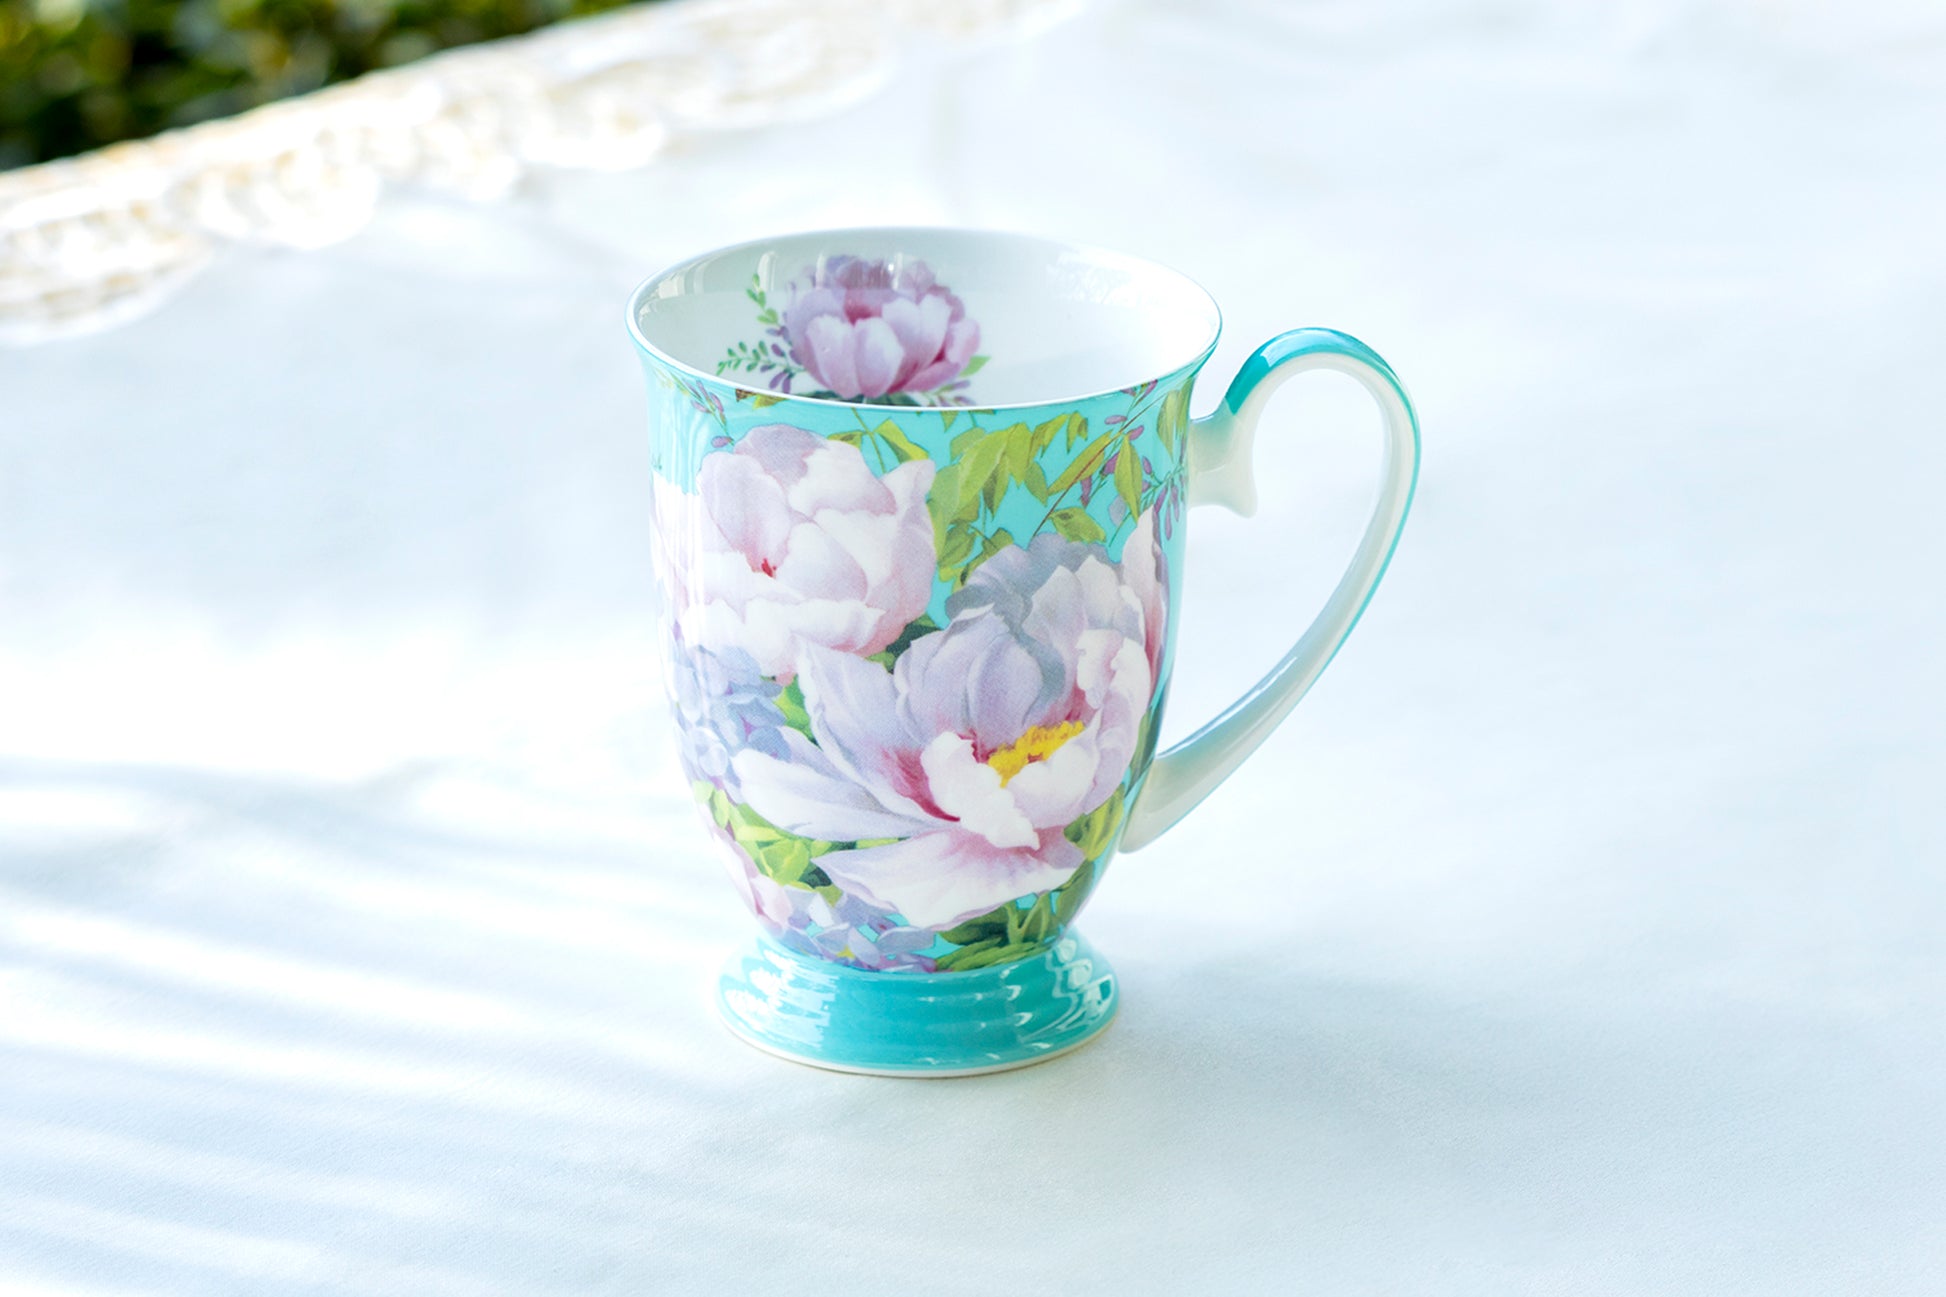 Blue Flowers Bone China Tea Set – Umi Tea Sets